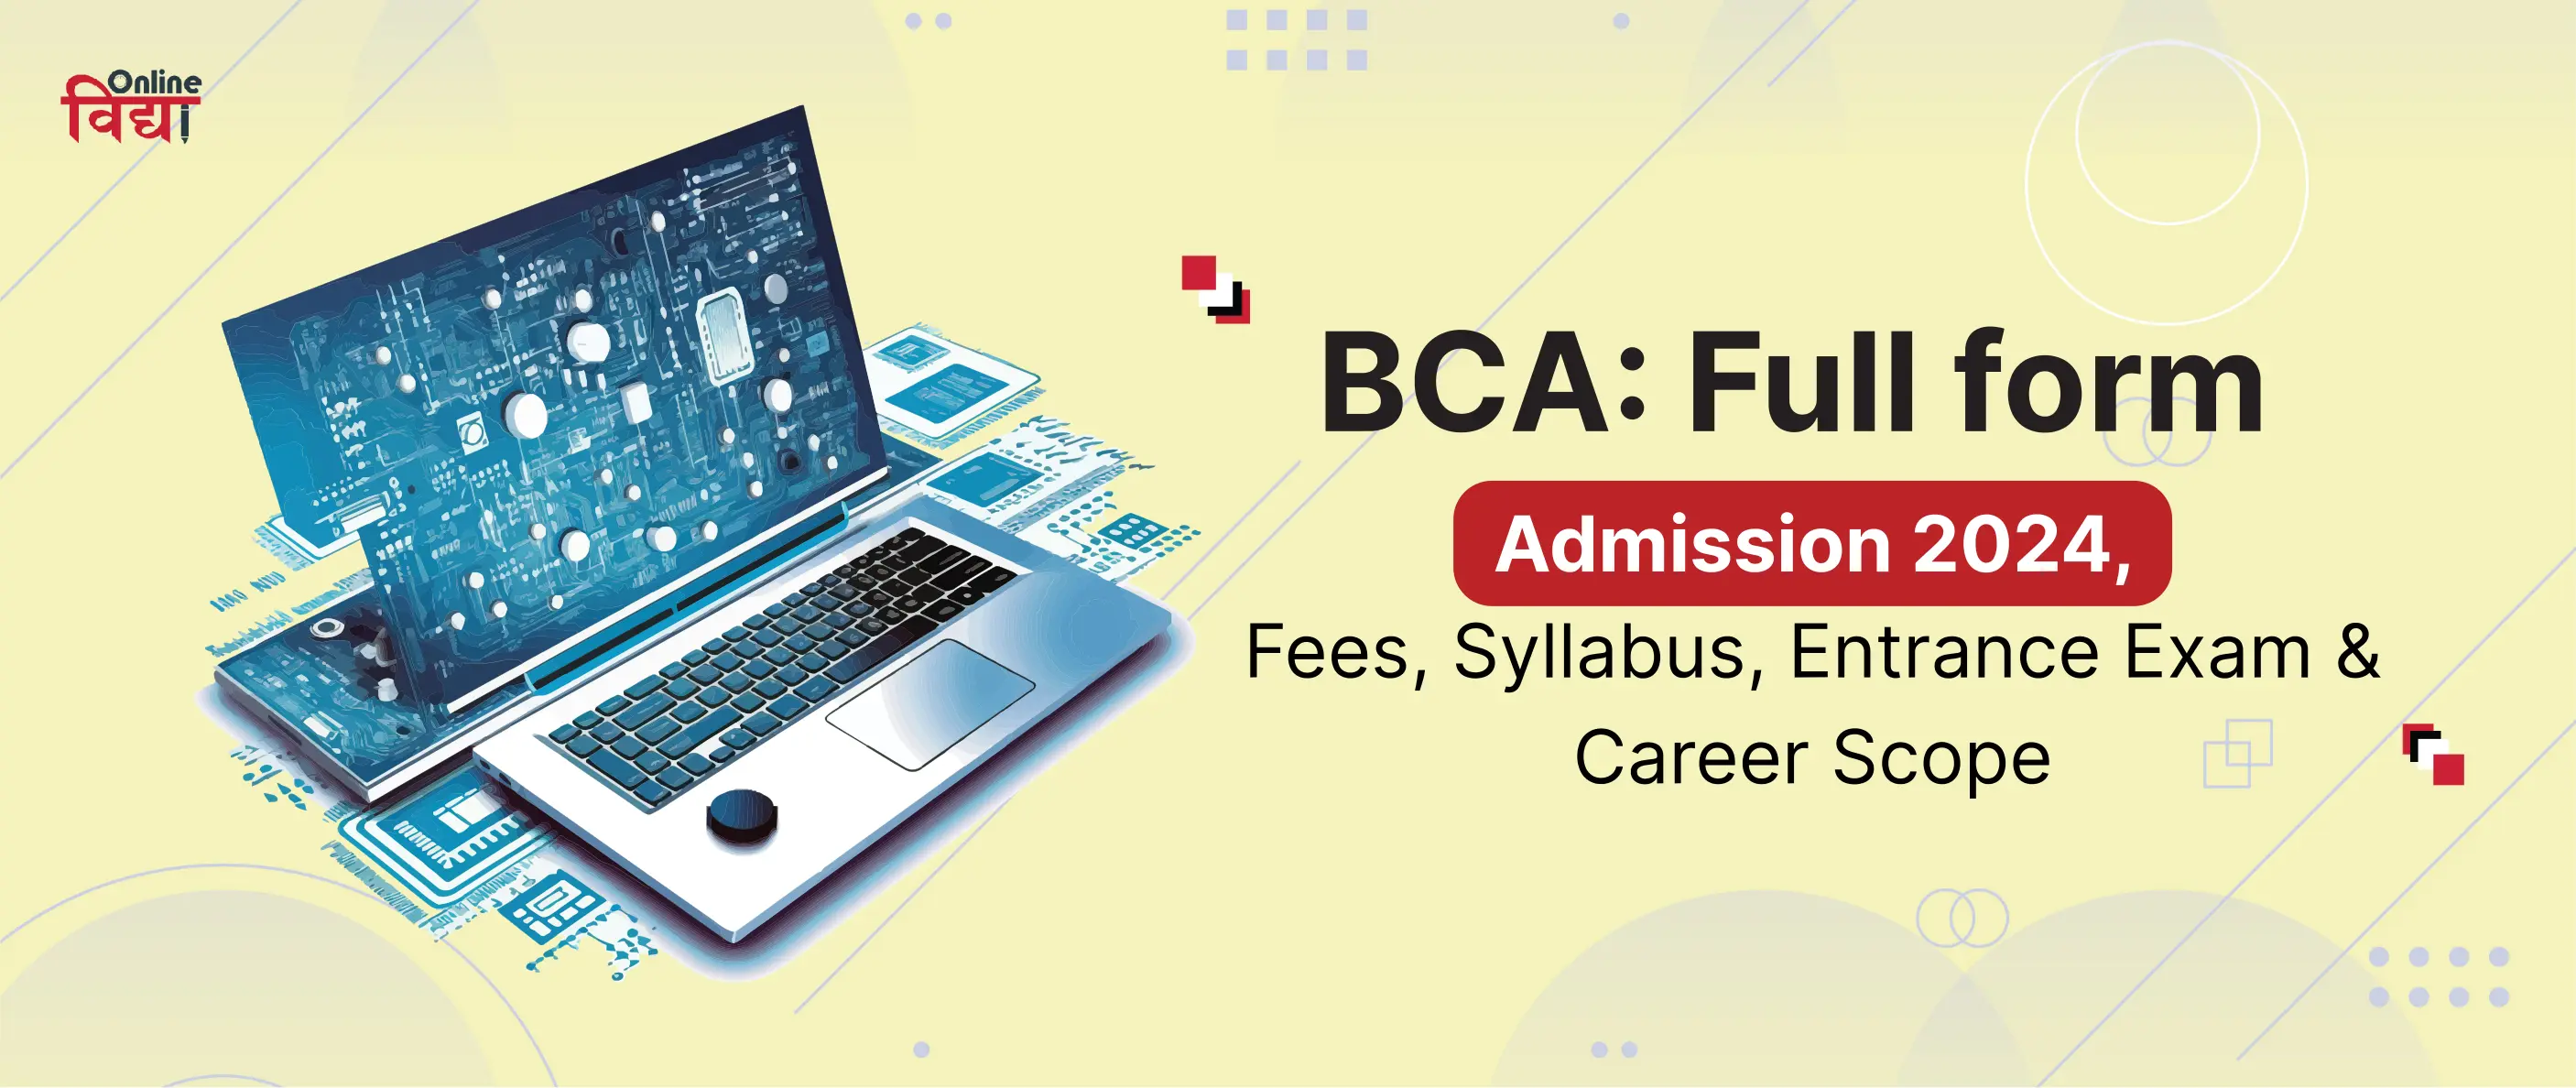 Online BCA: Full form, Admission 2024, Fees, Syllabus, Entrance Exam & Career Scope